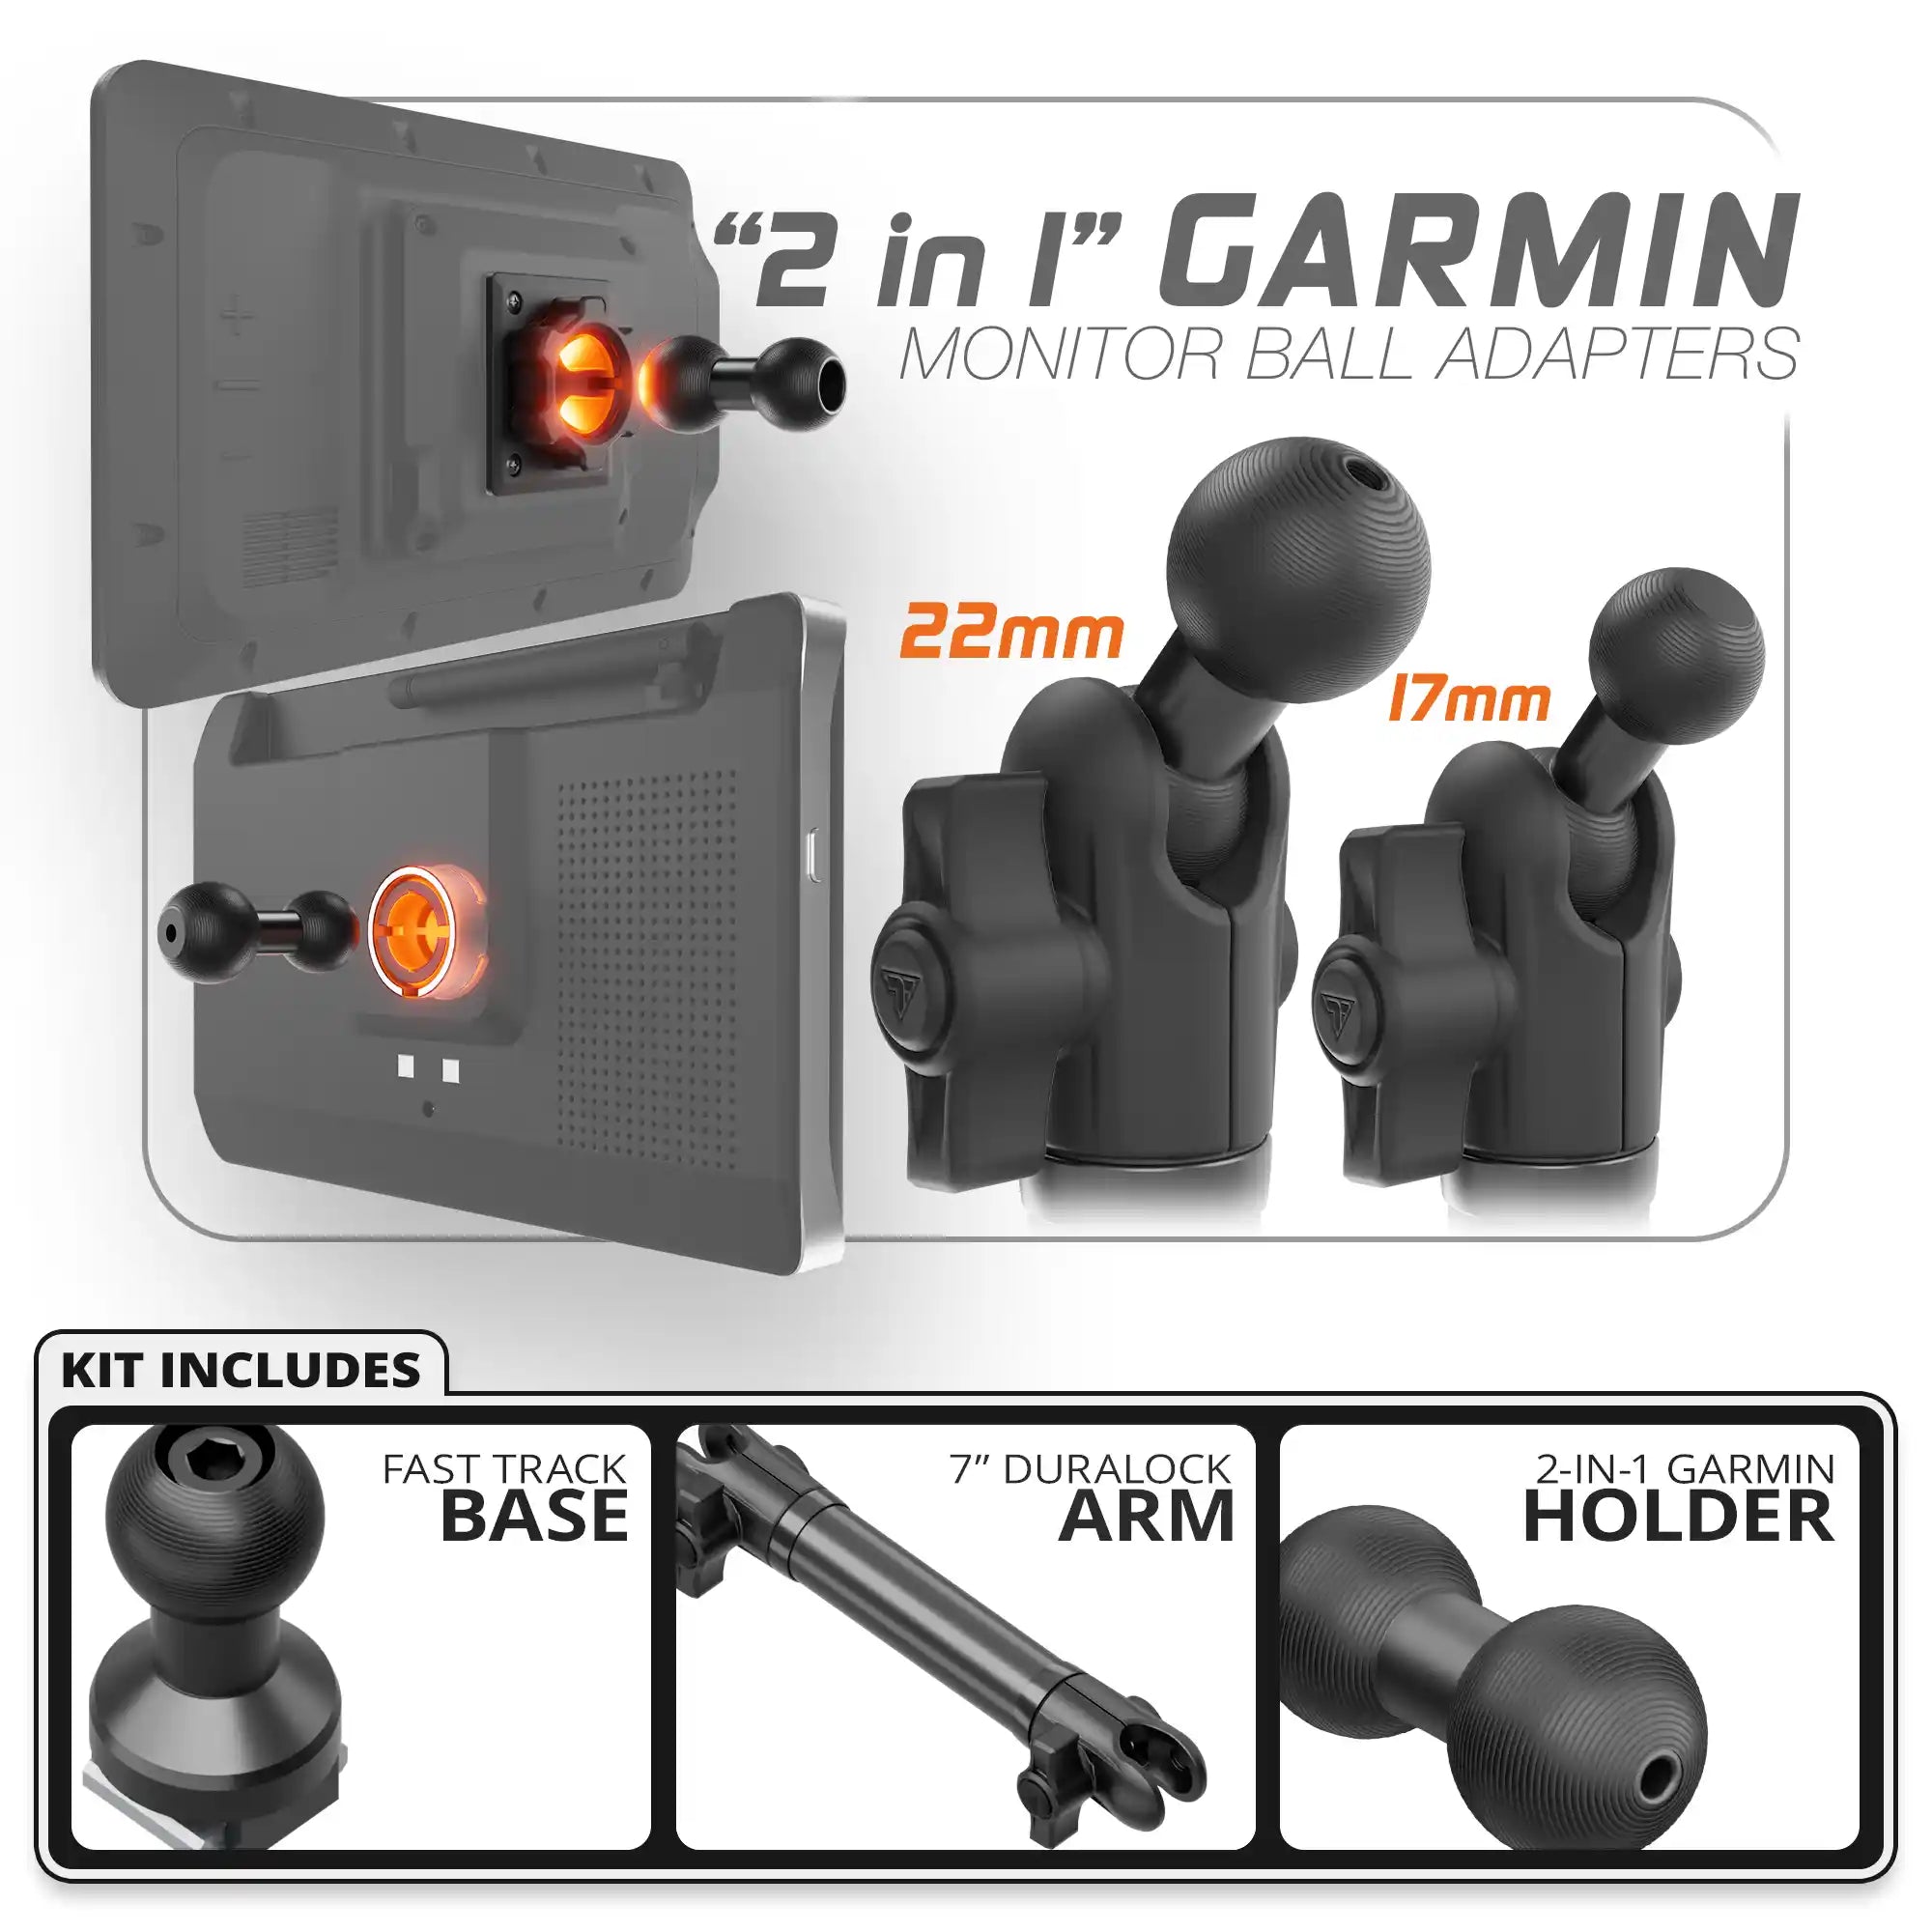 Garmin | Fast Track Base | 7" DuraLock Arm